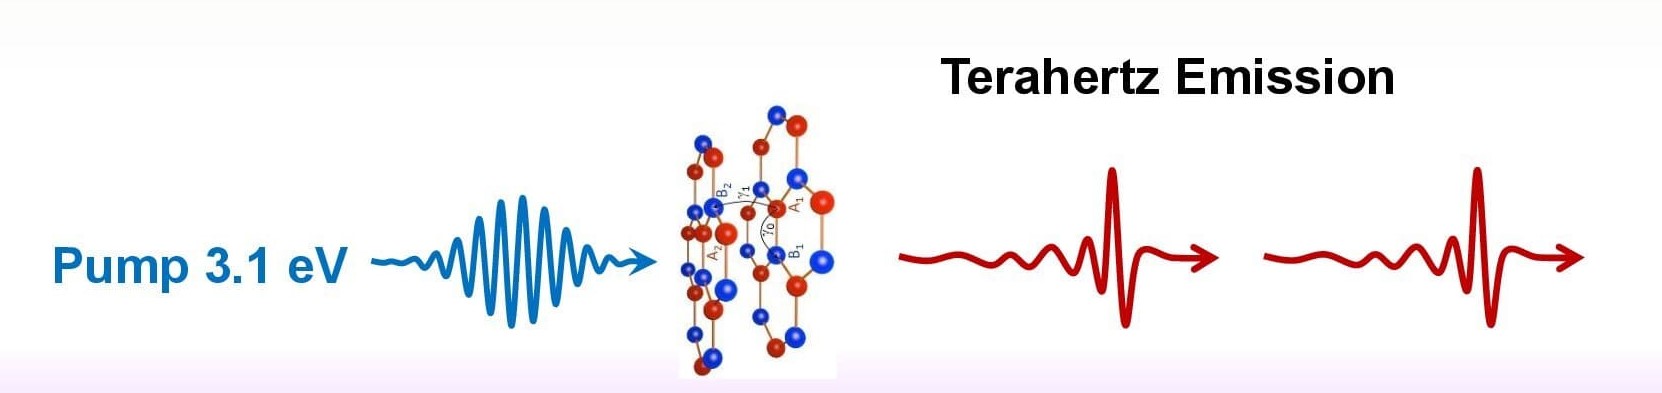 Terahertz Emission Spectroscopy